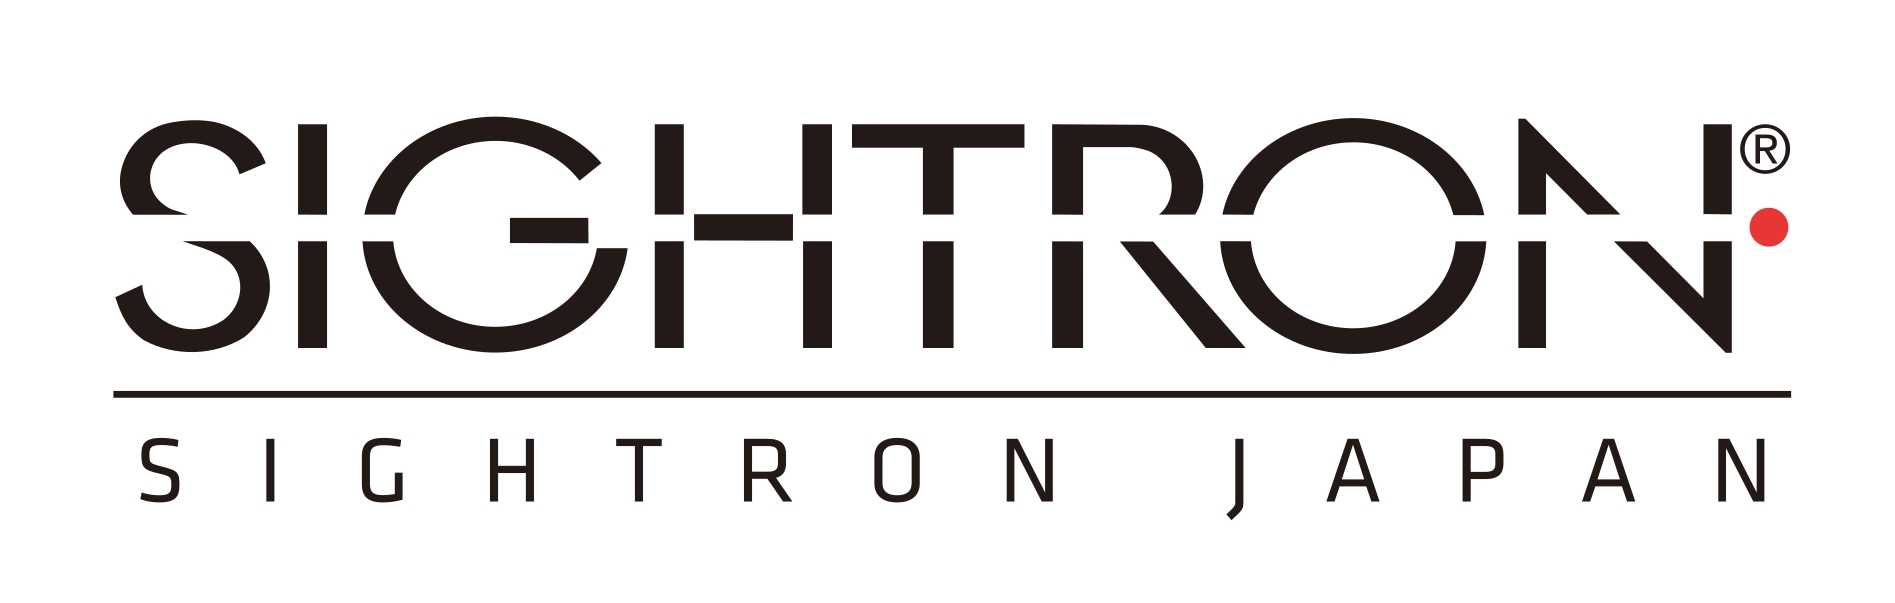 Sightron Japan ロゴ